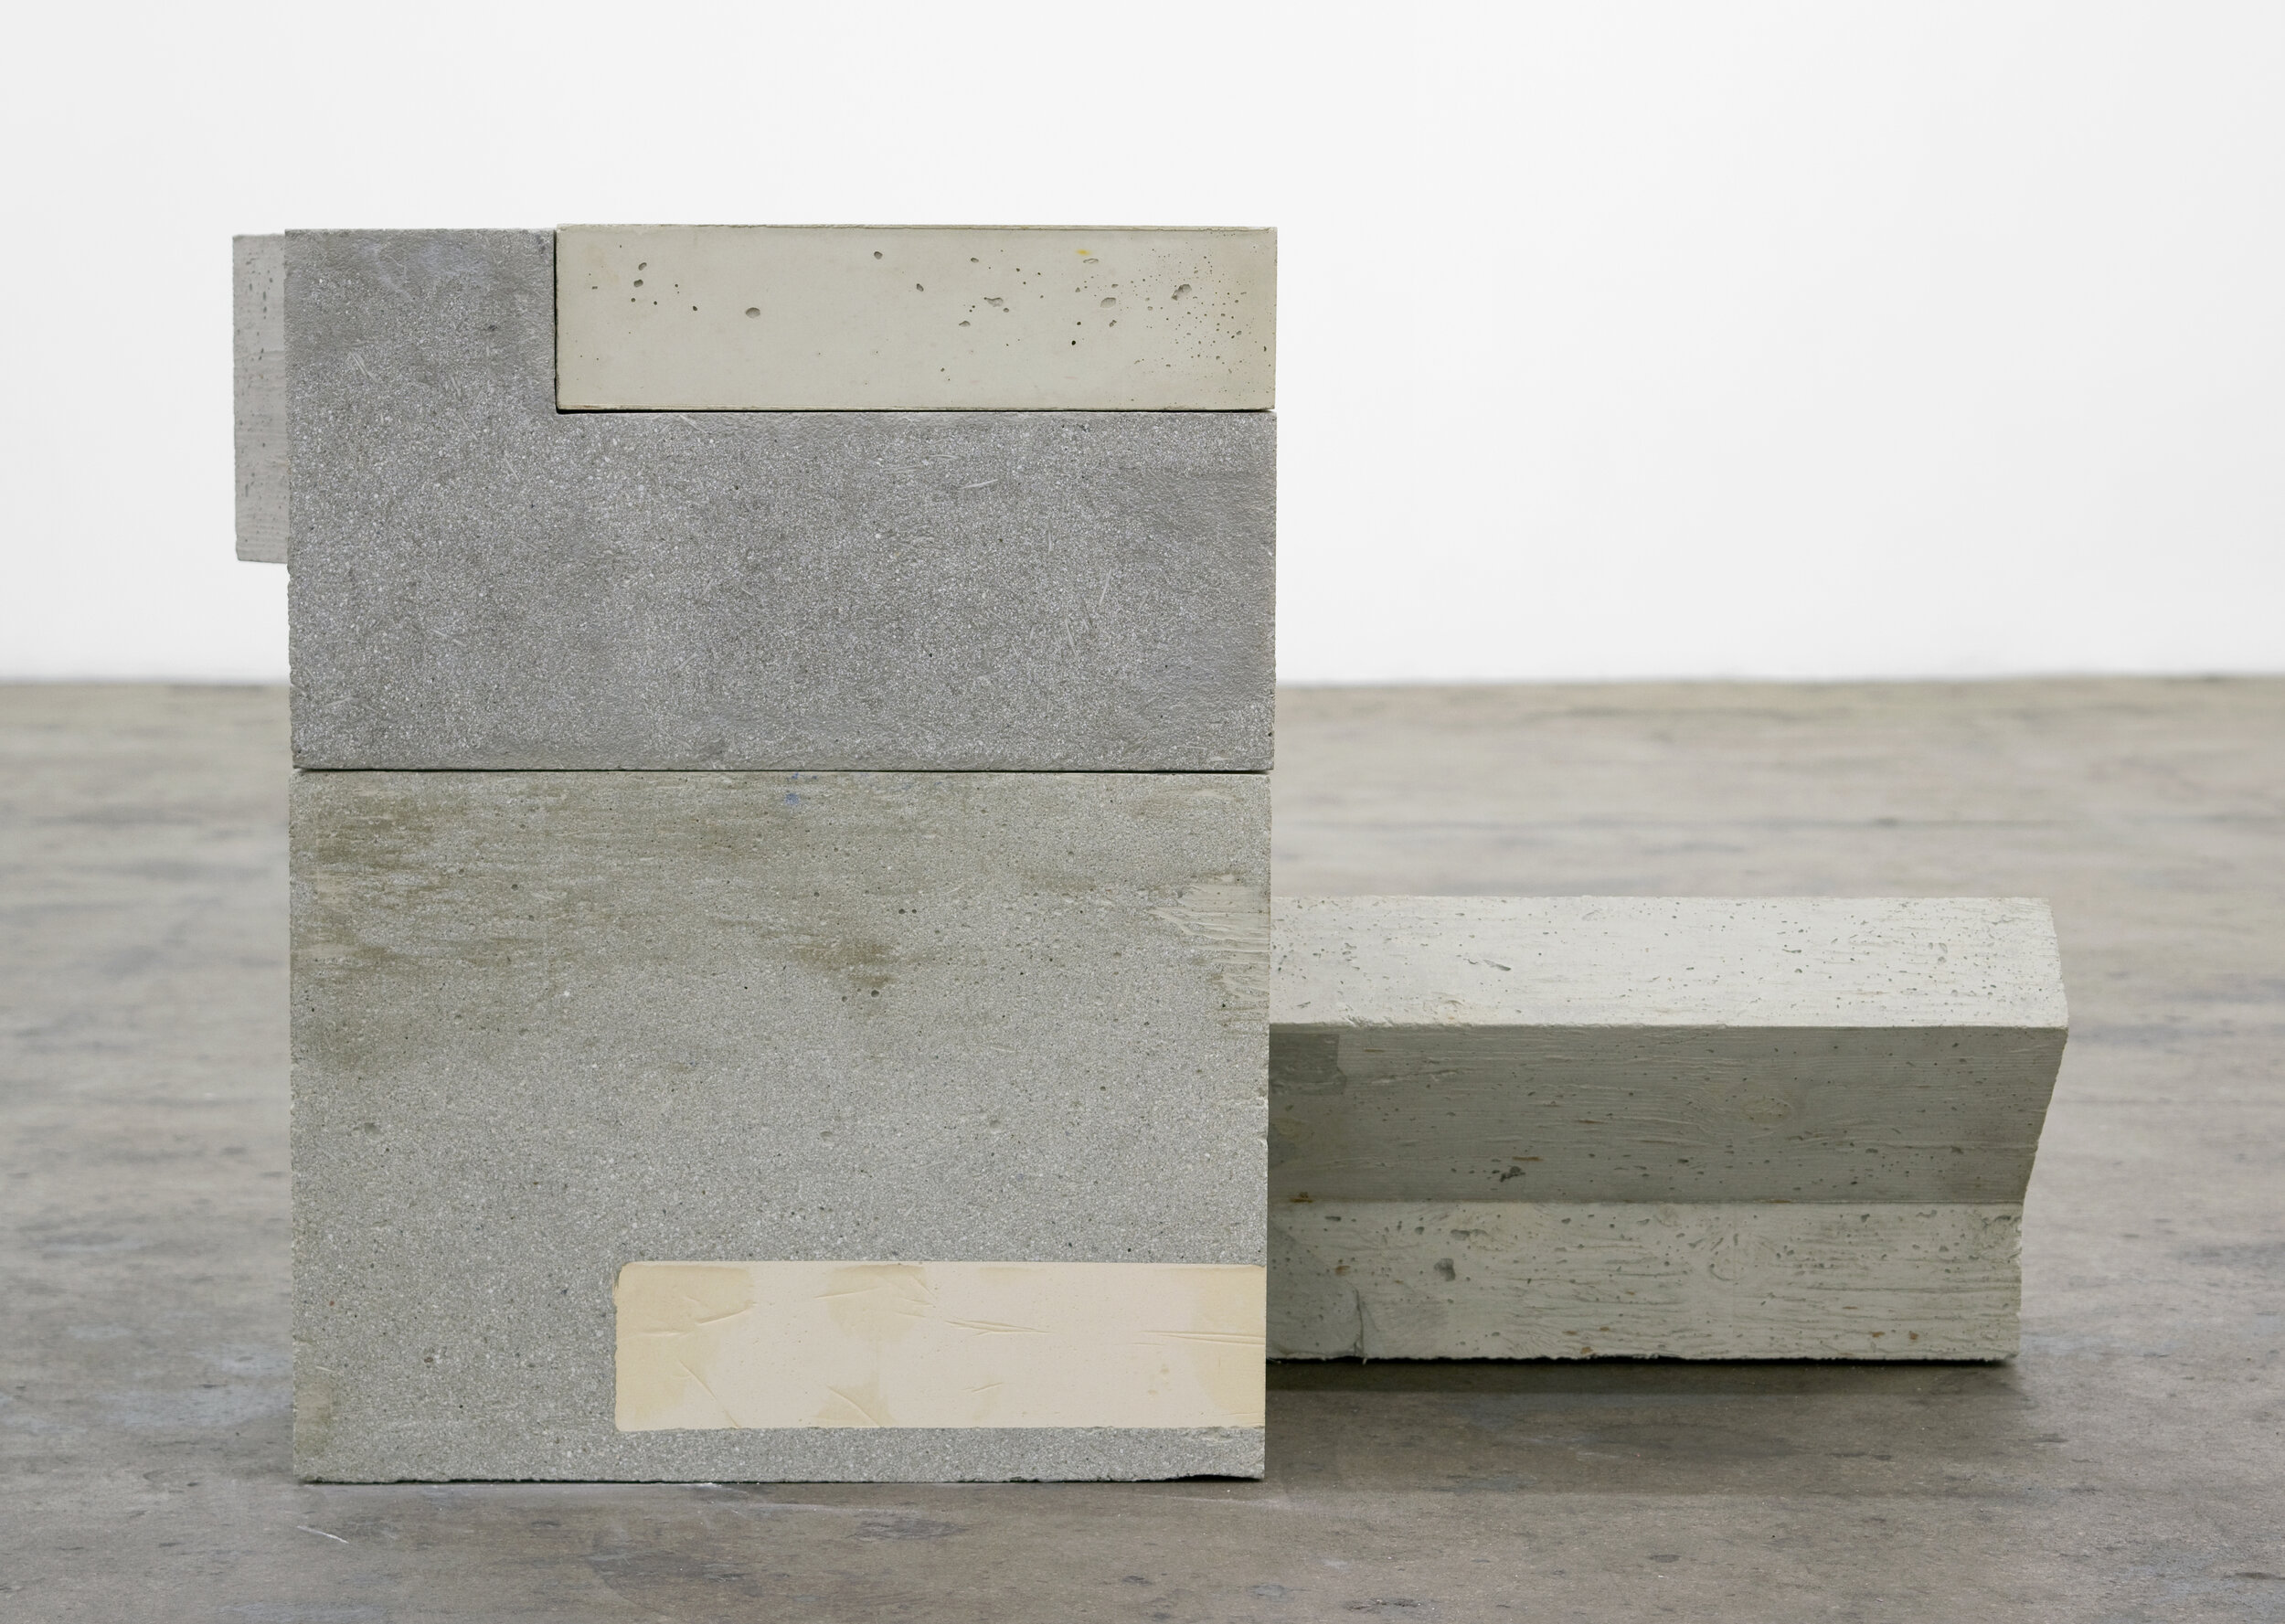   Villiphit , 2019, fibre-reinforced concrete, ceramic inlay, polystyrene foam, stainless steel hardware, 21 x 34 x 22 in 